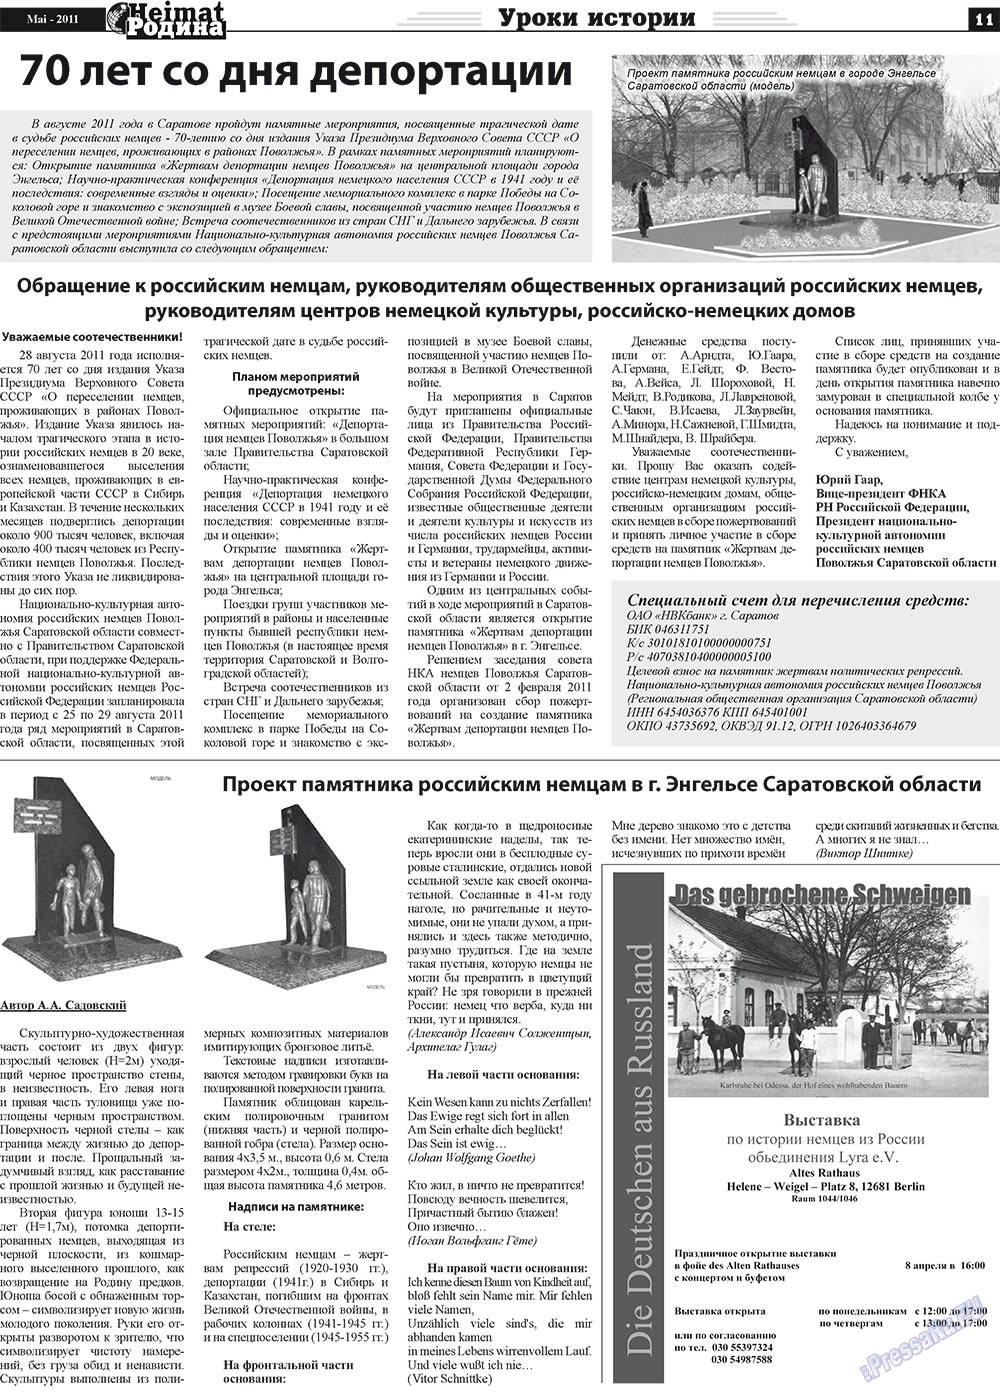 Heimat-Родина, газета. 2011 №5 стр.11